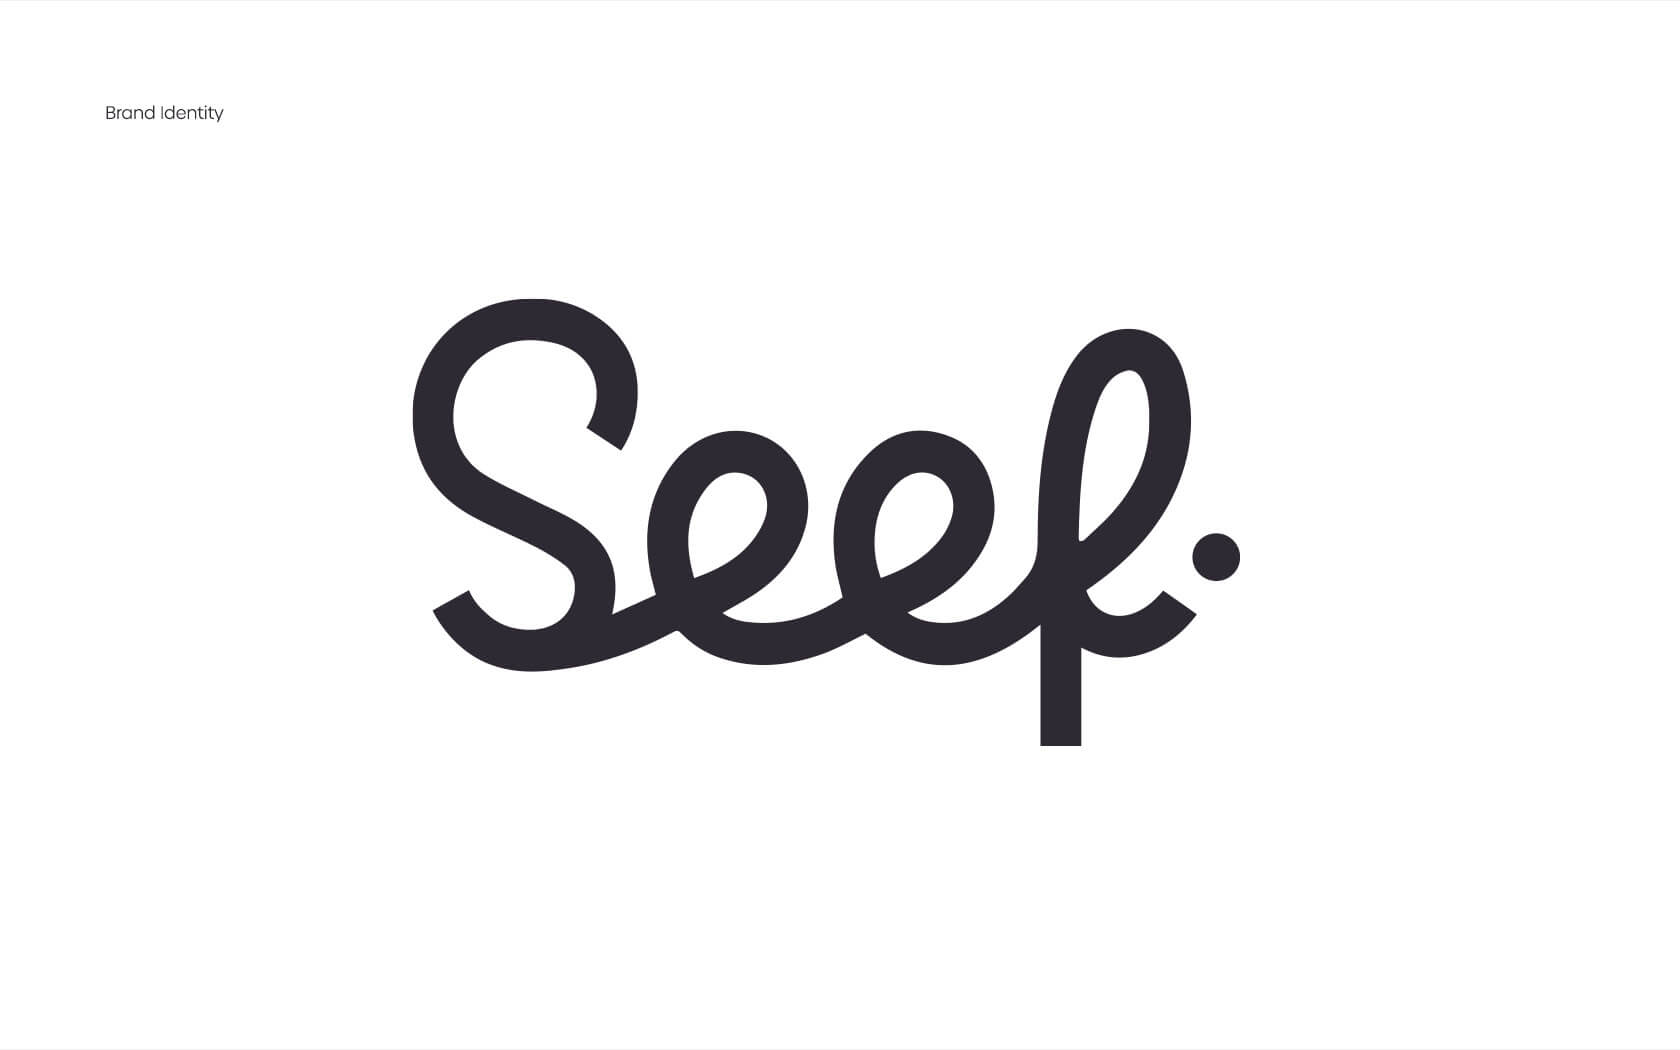 Seef. Brand logo